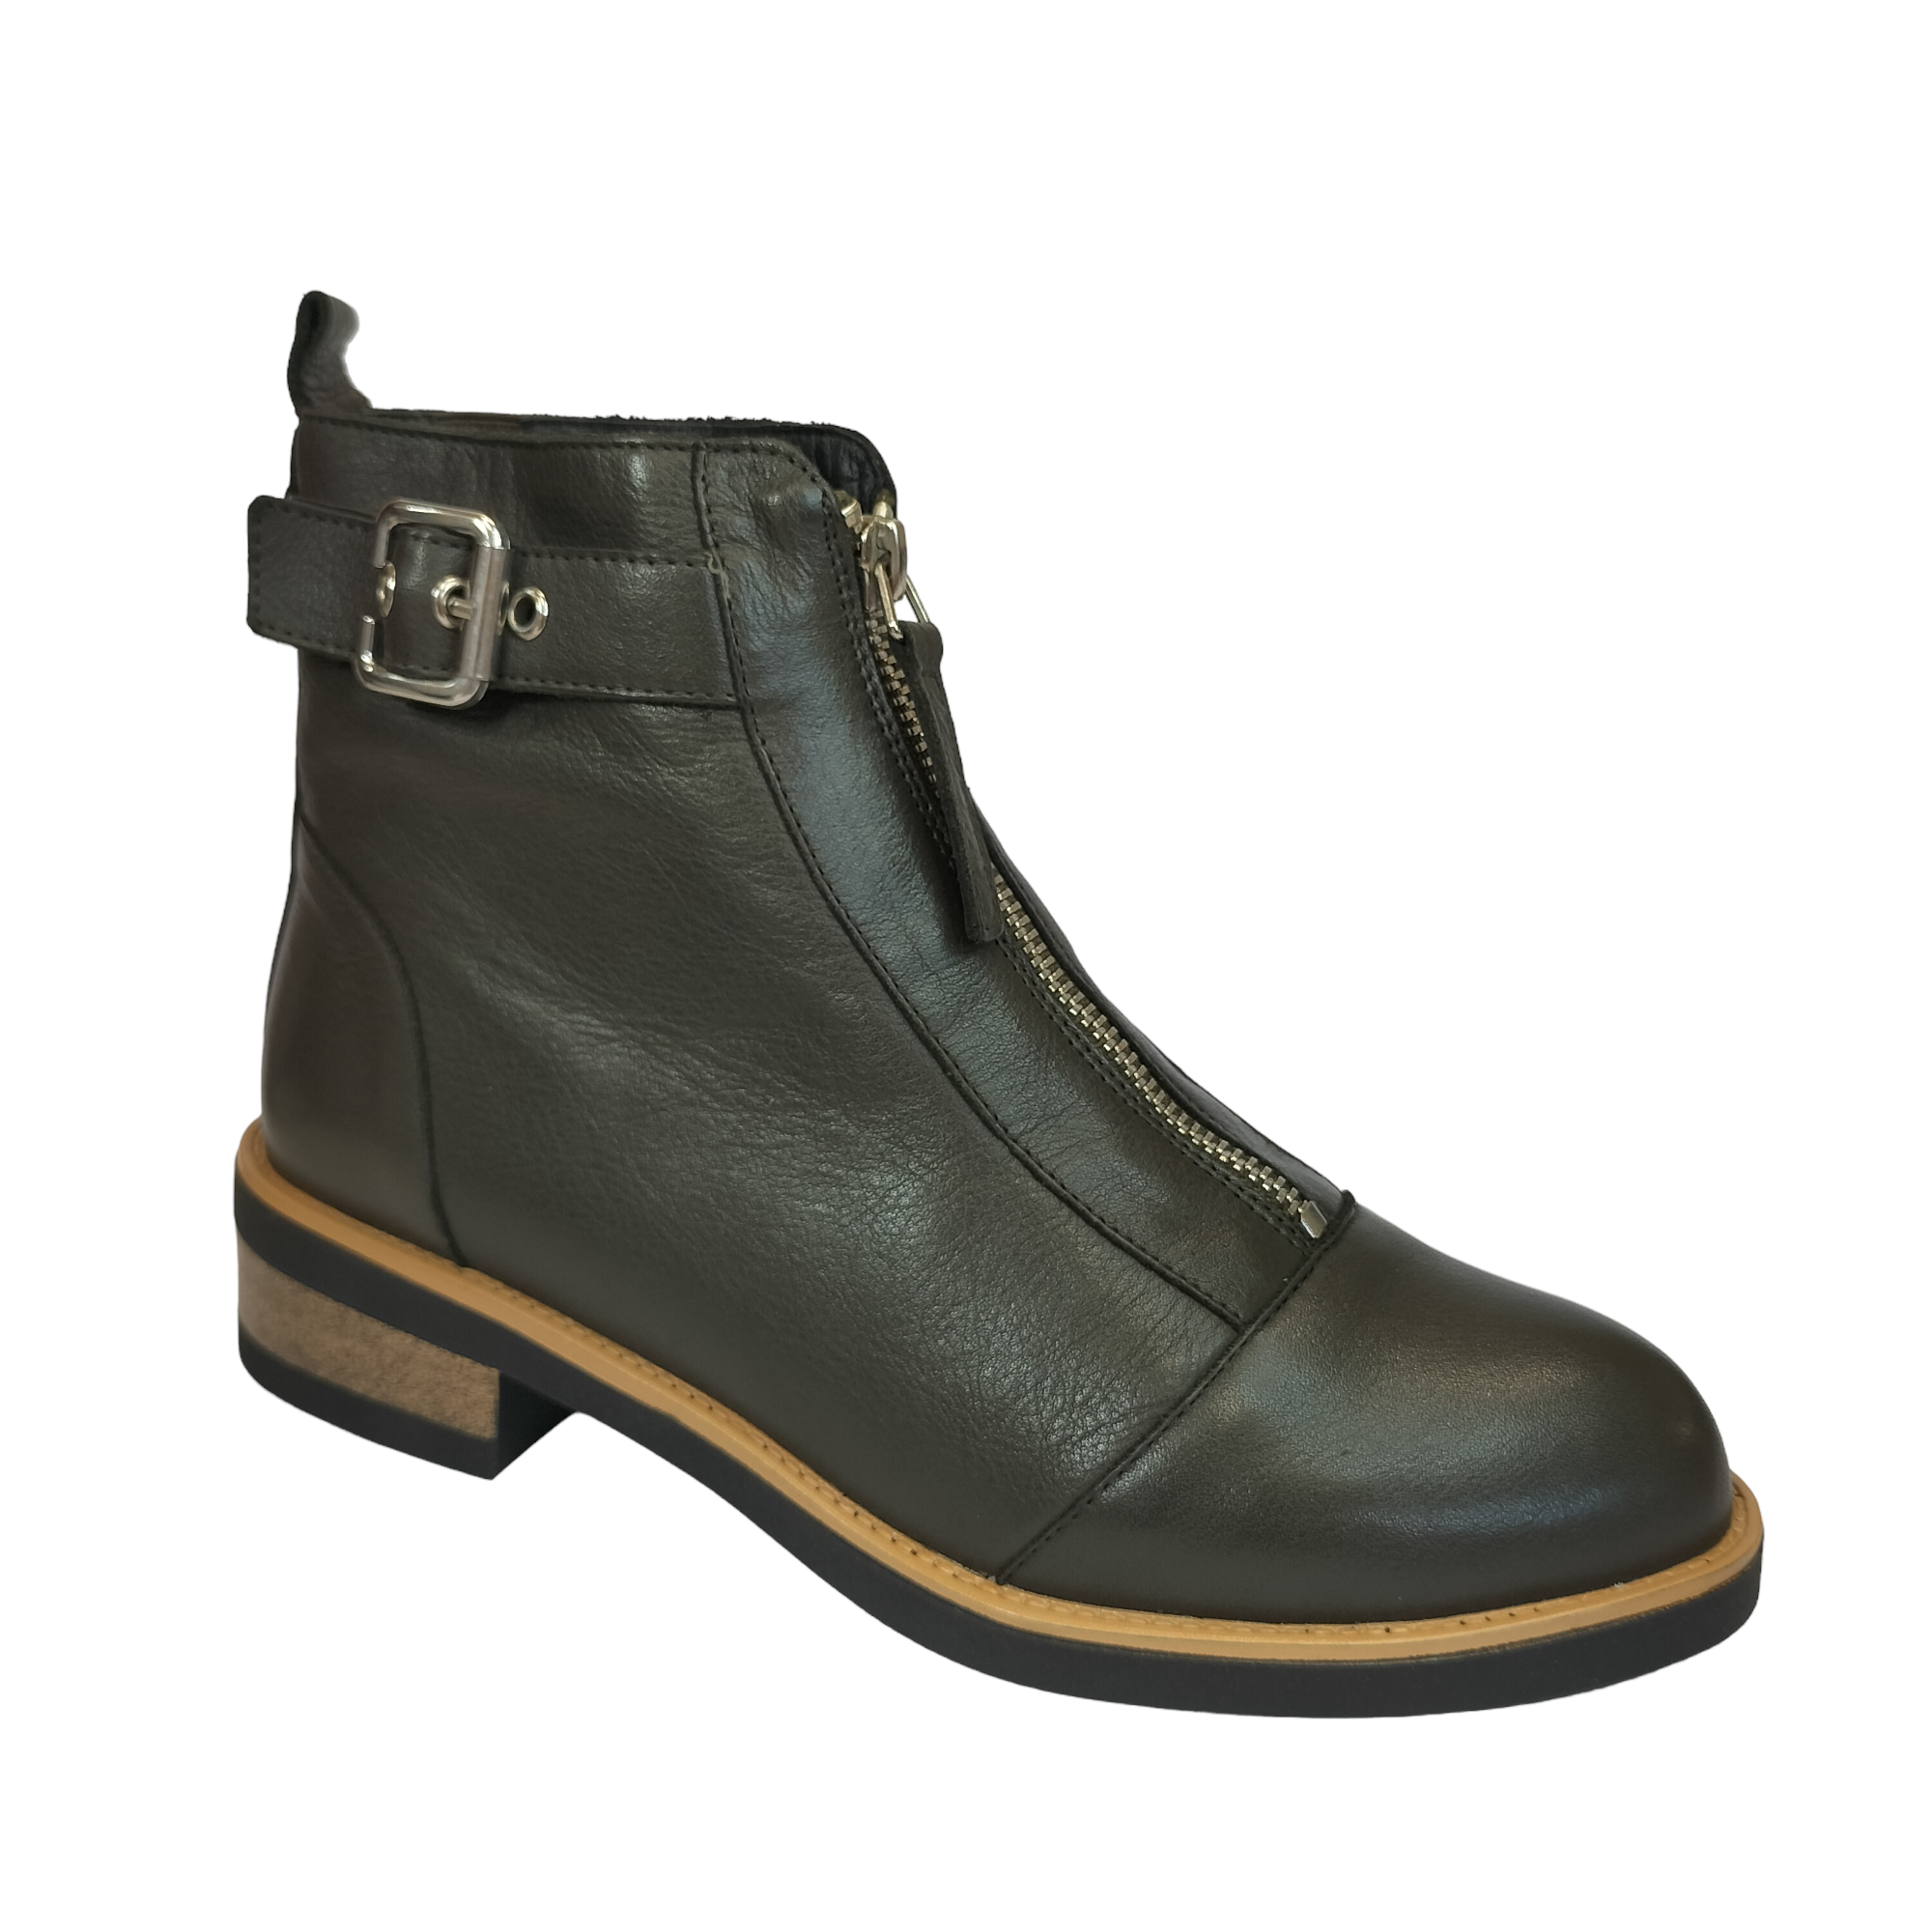 Dooley - shoe&amp;me - Bresley - Boot - Boots, Winter, Womens